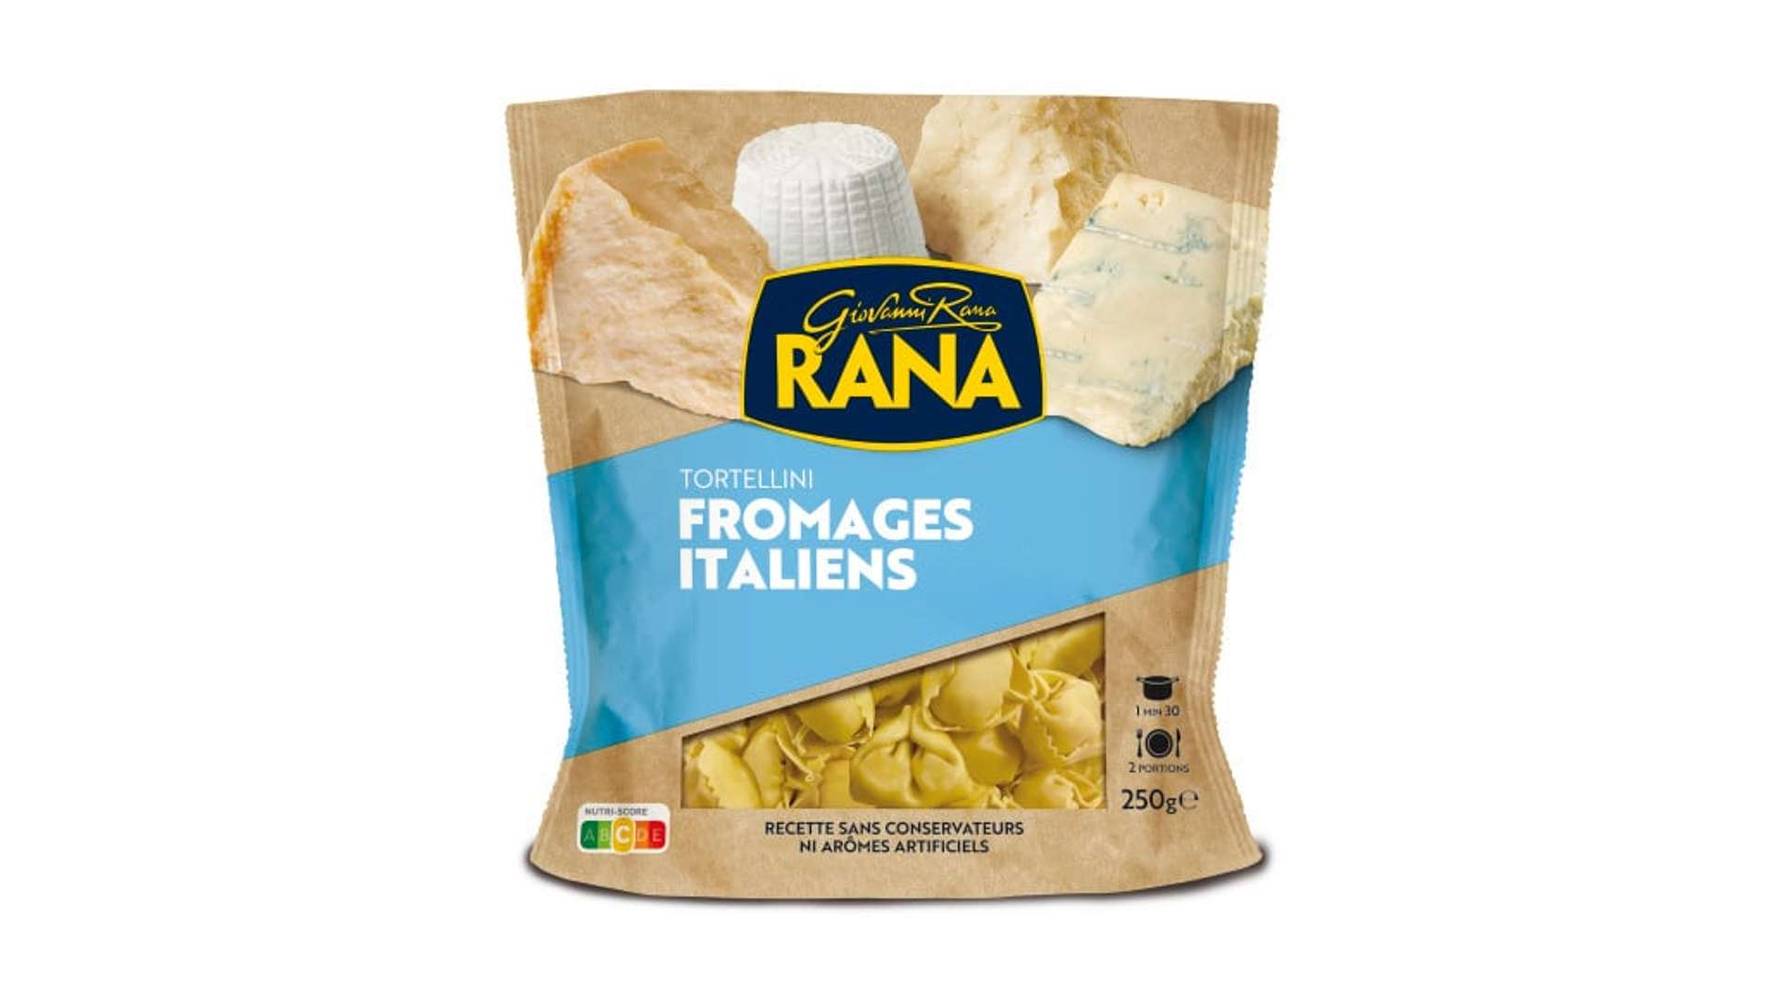 RANA Rana tortellini fromages italiens 250g Le paquet de 250g